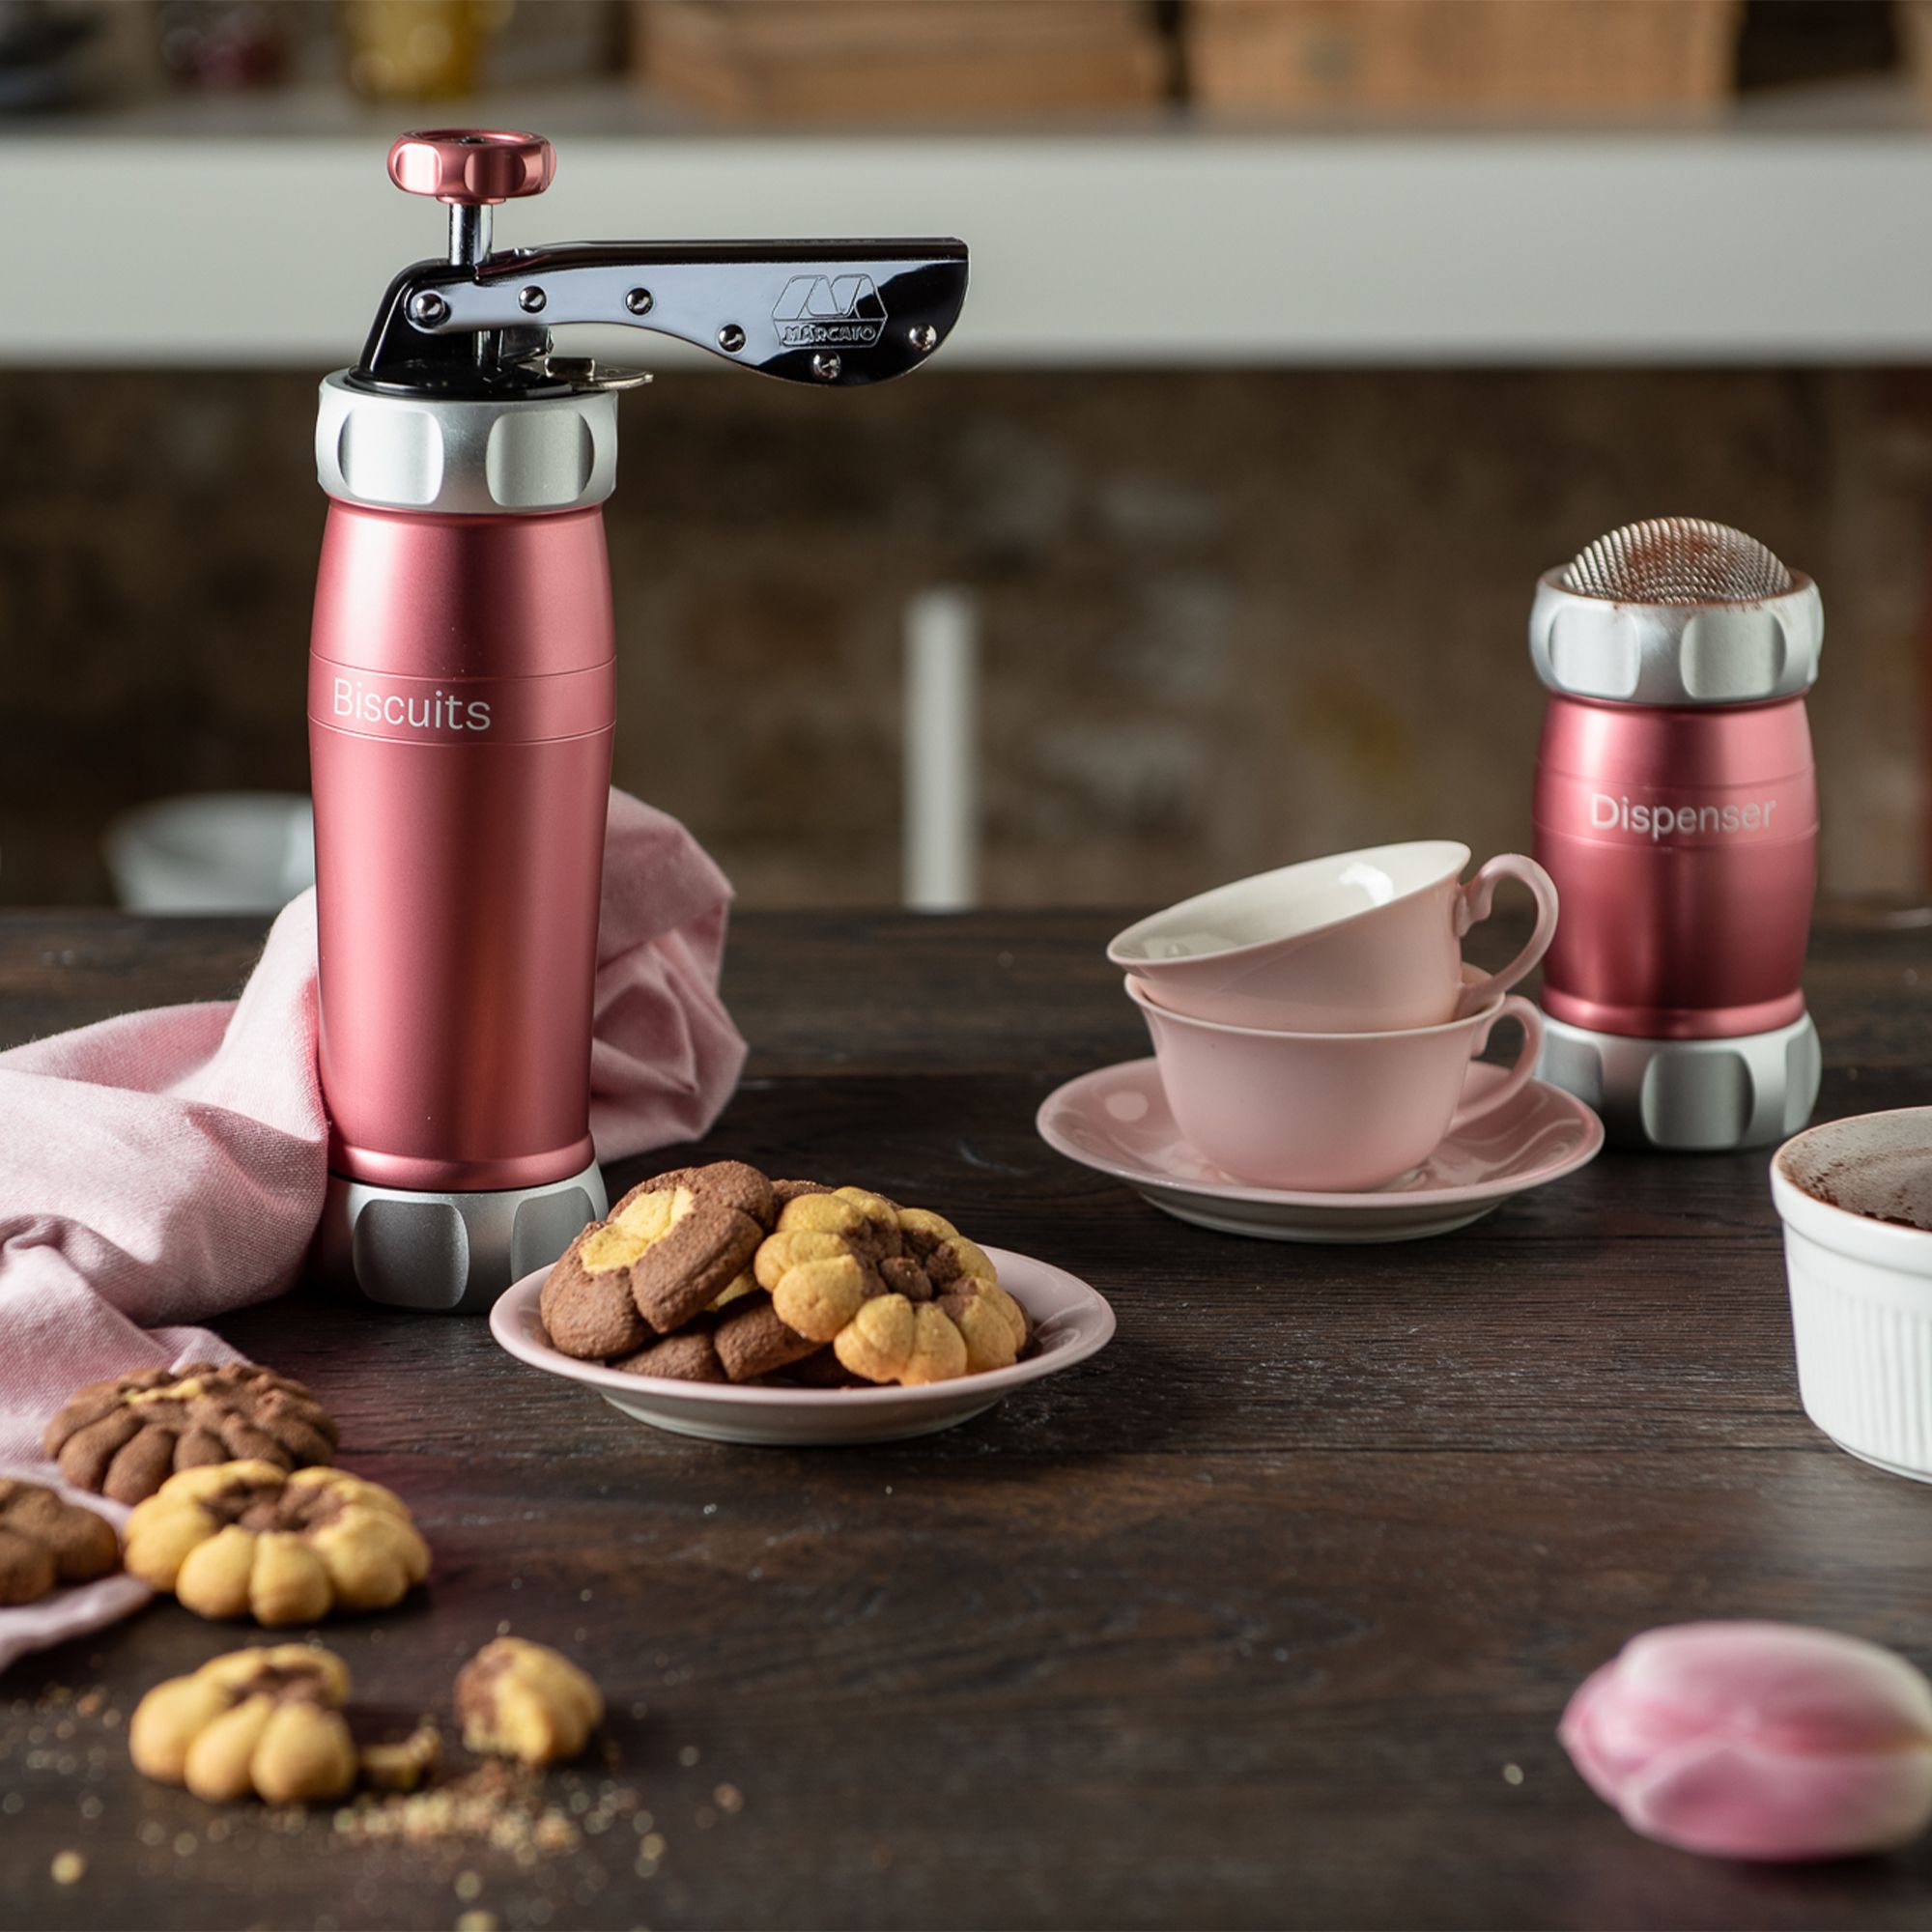 Marcato - Biscuits Design - Pink